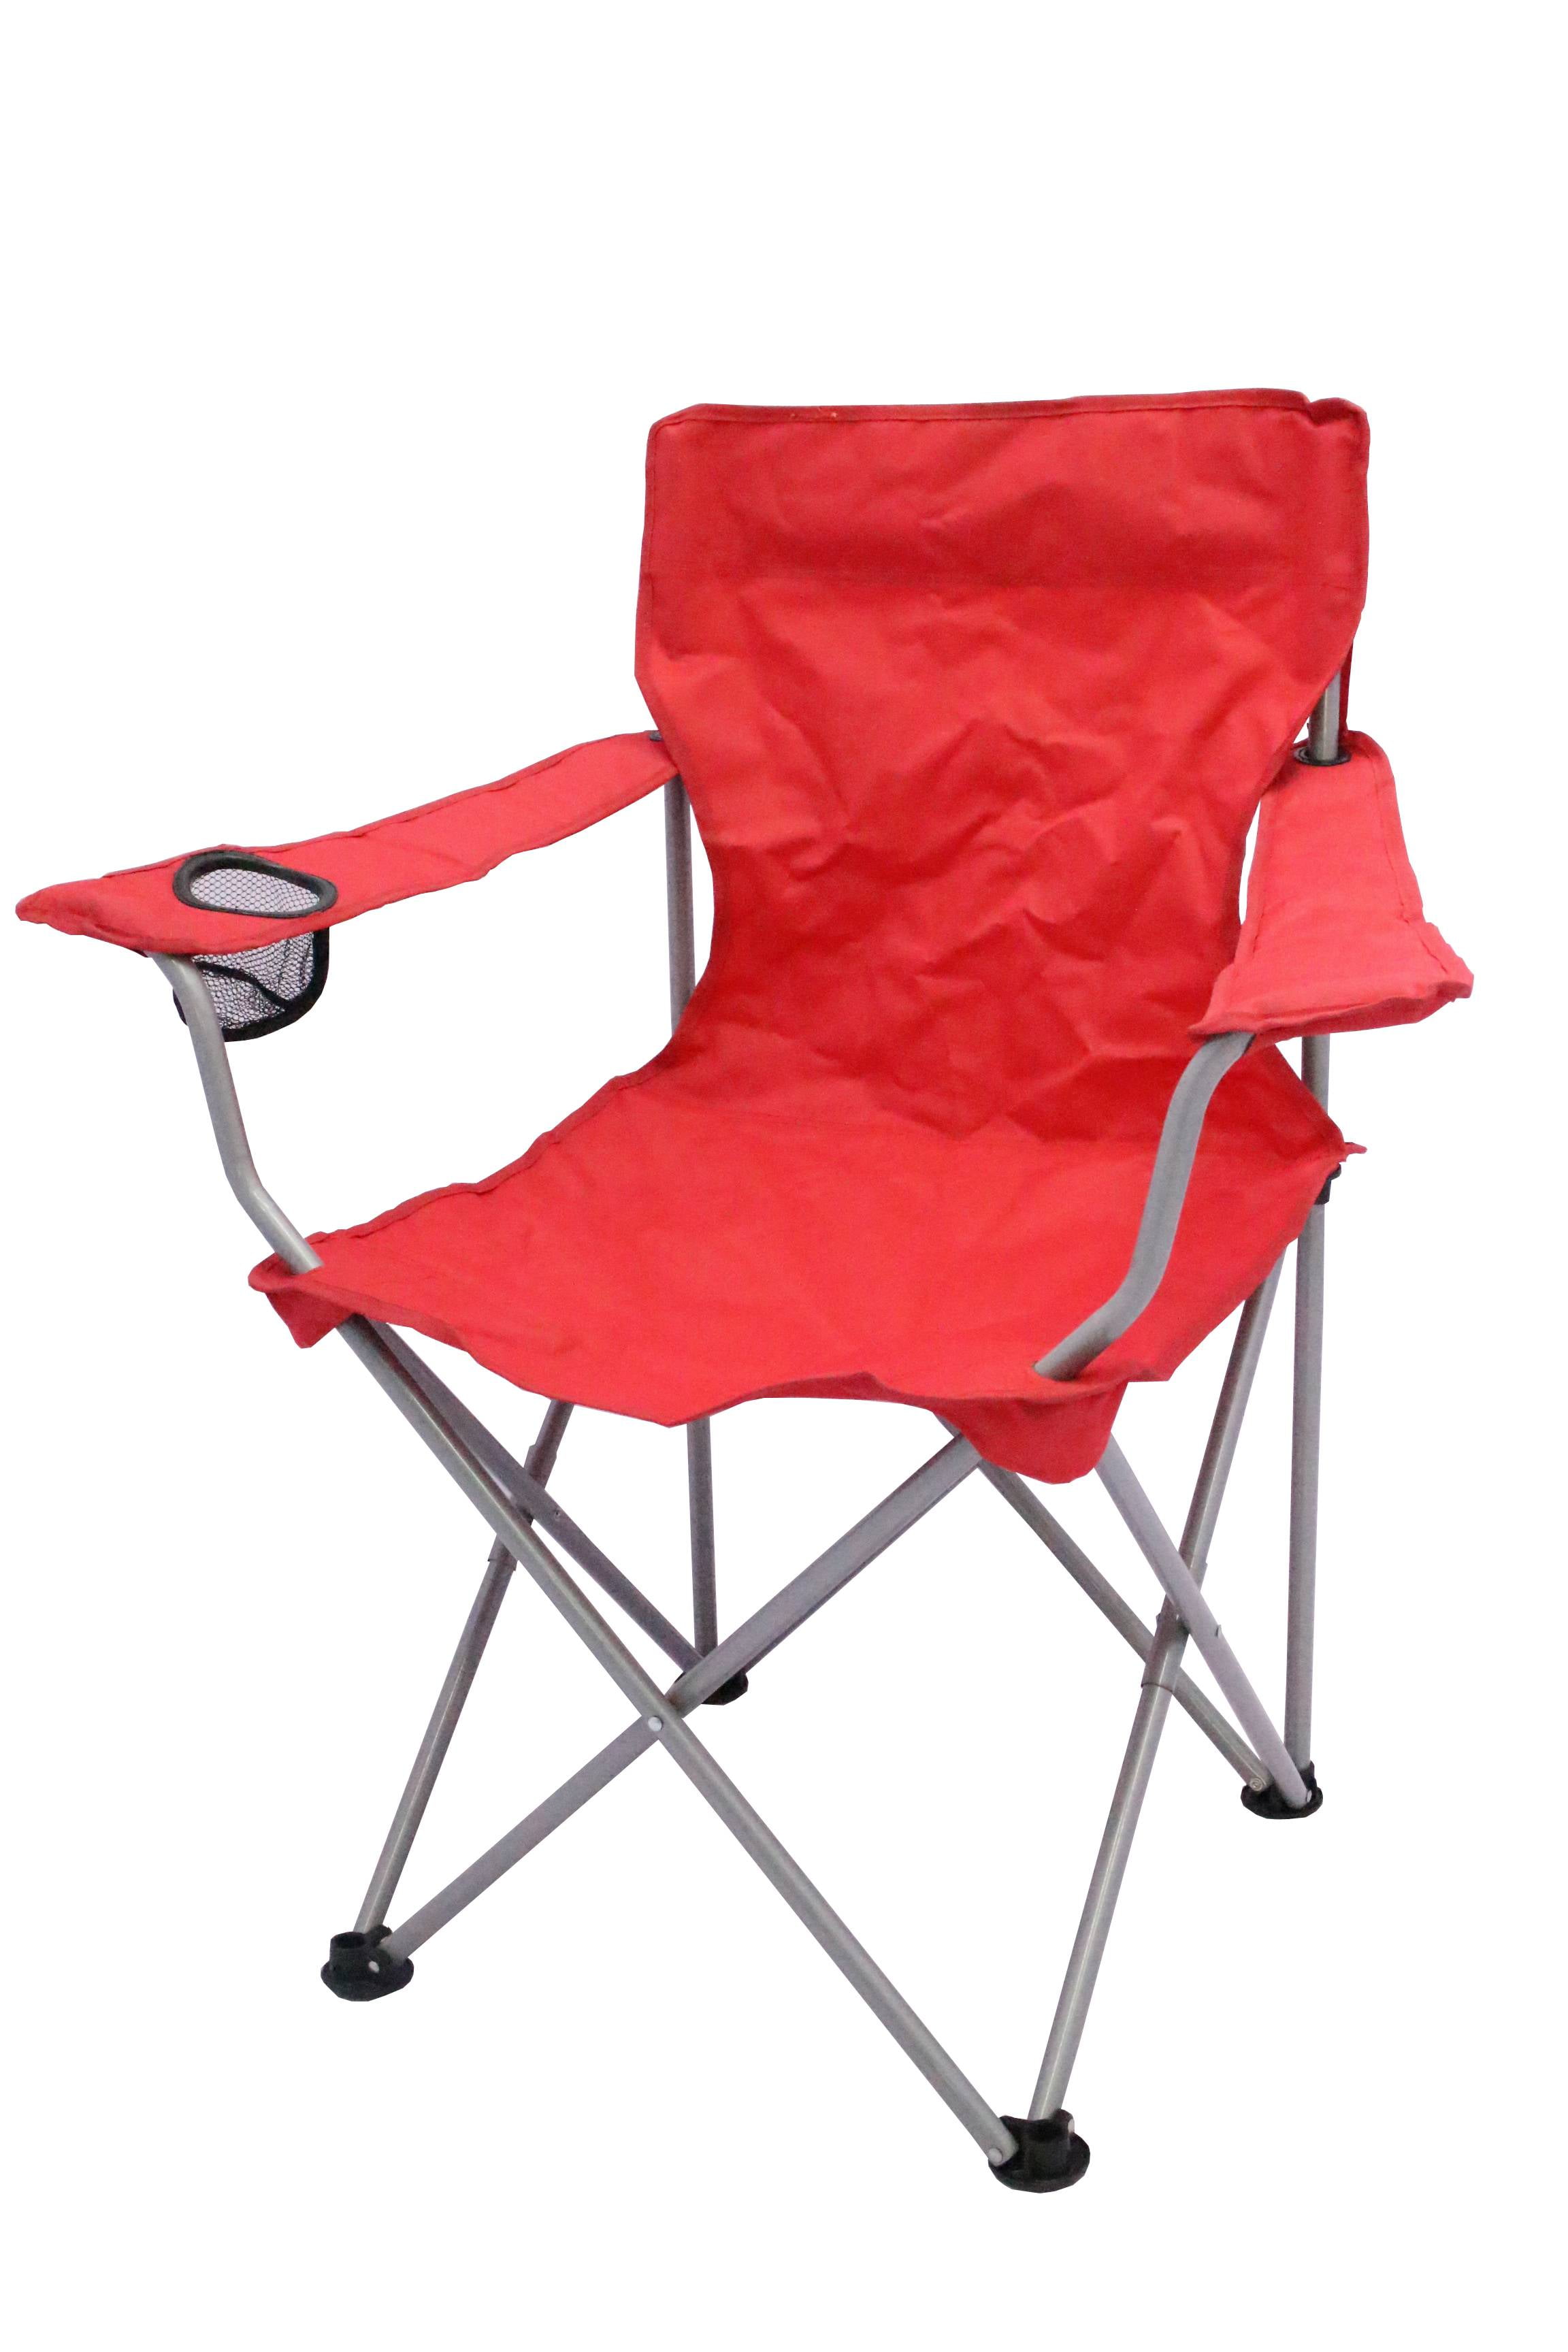 Ozark Trail Camping Basic Comfort Chair 